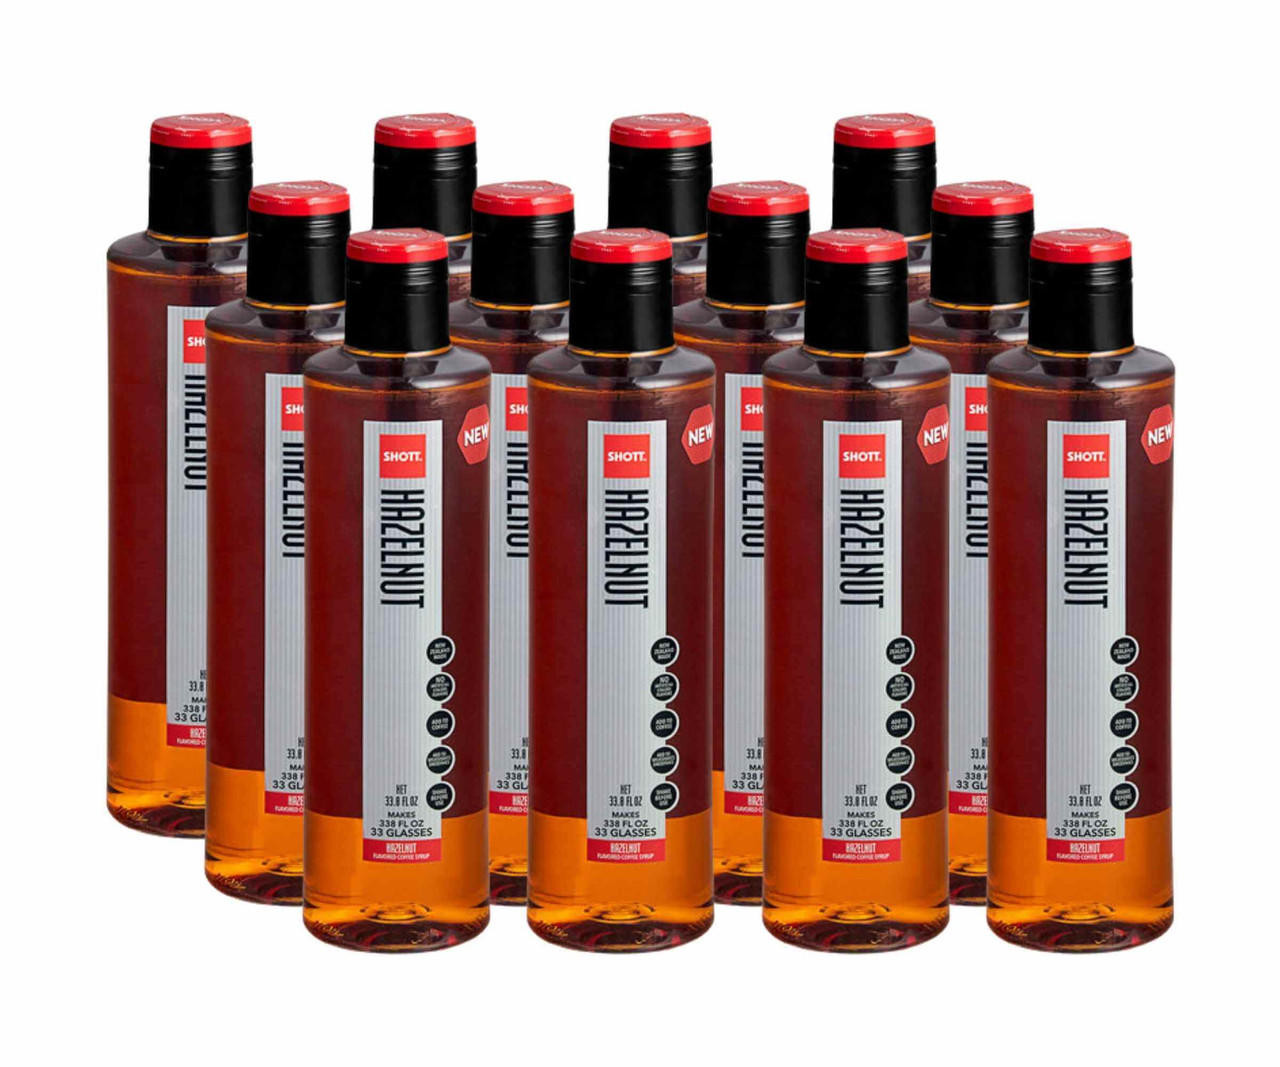  SHOTT Hazelnut Flavoring Syrup - 1 Liter Bottle for Rich and Nutty Delights 